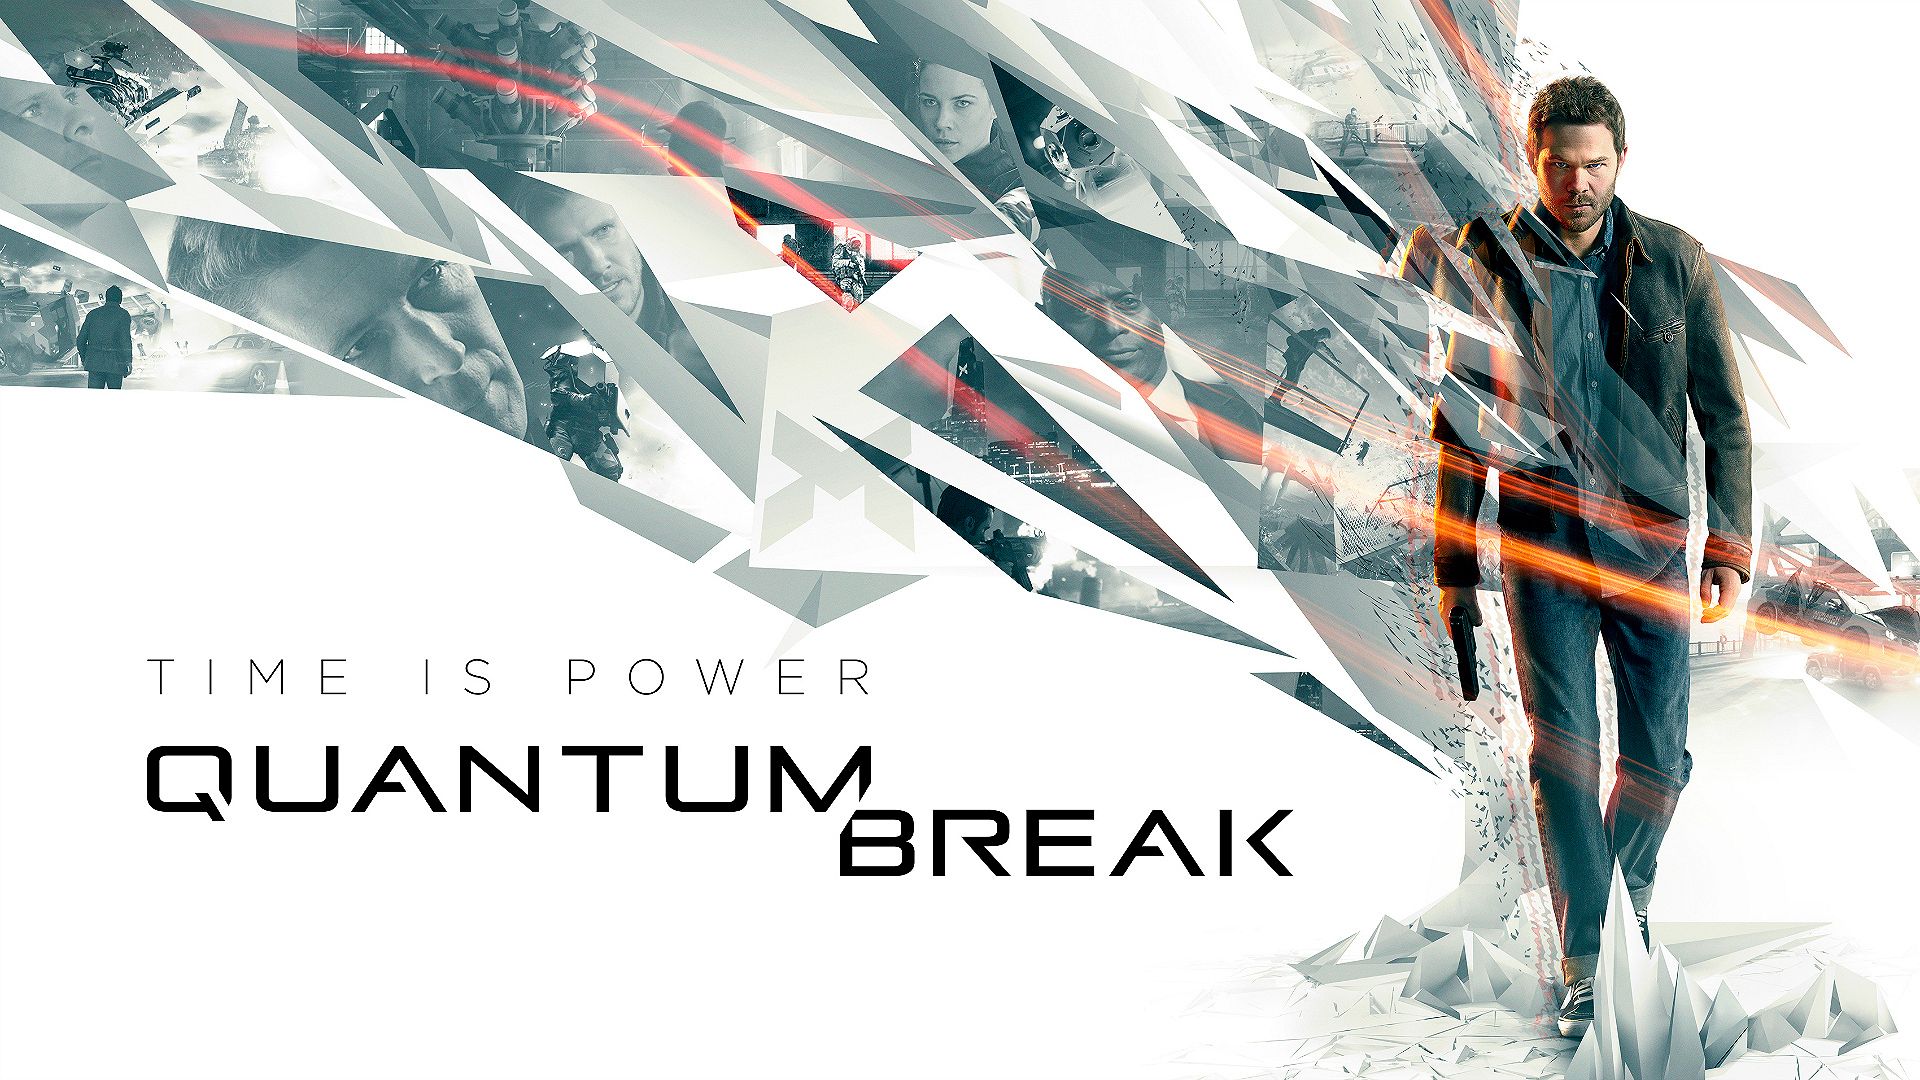 Rimandata la versione Steam di Quantum Break